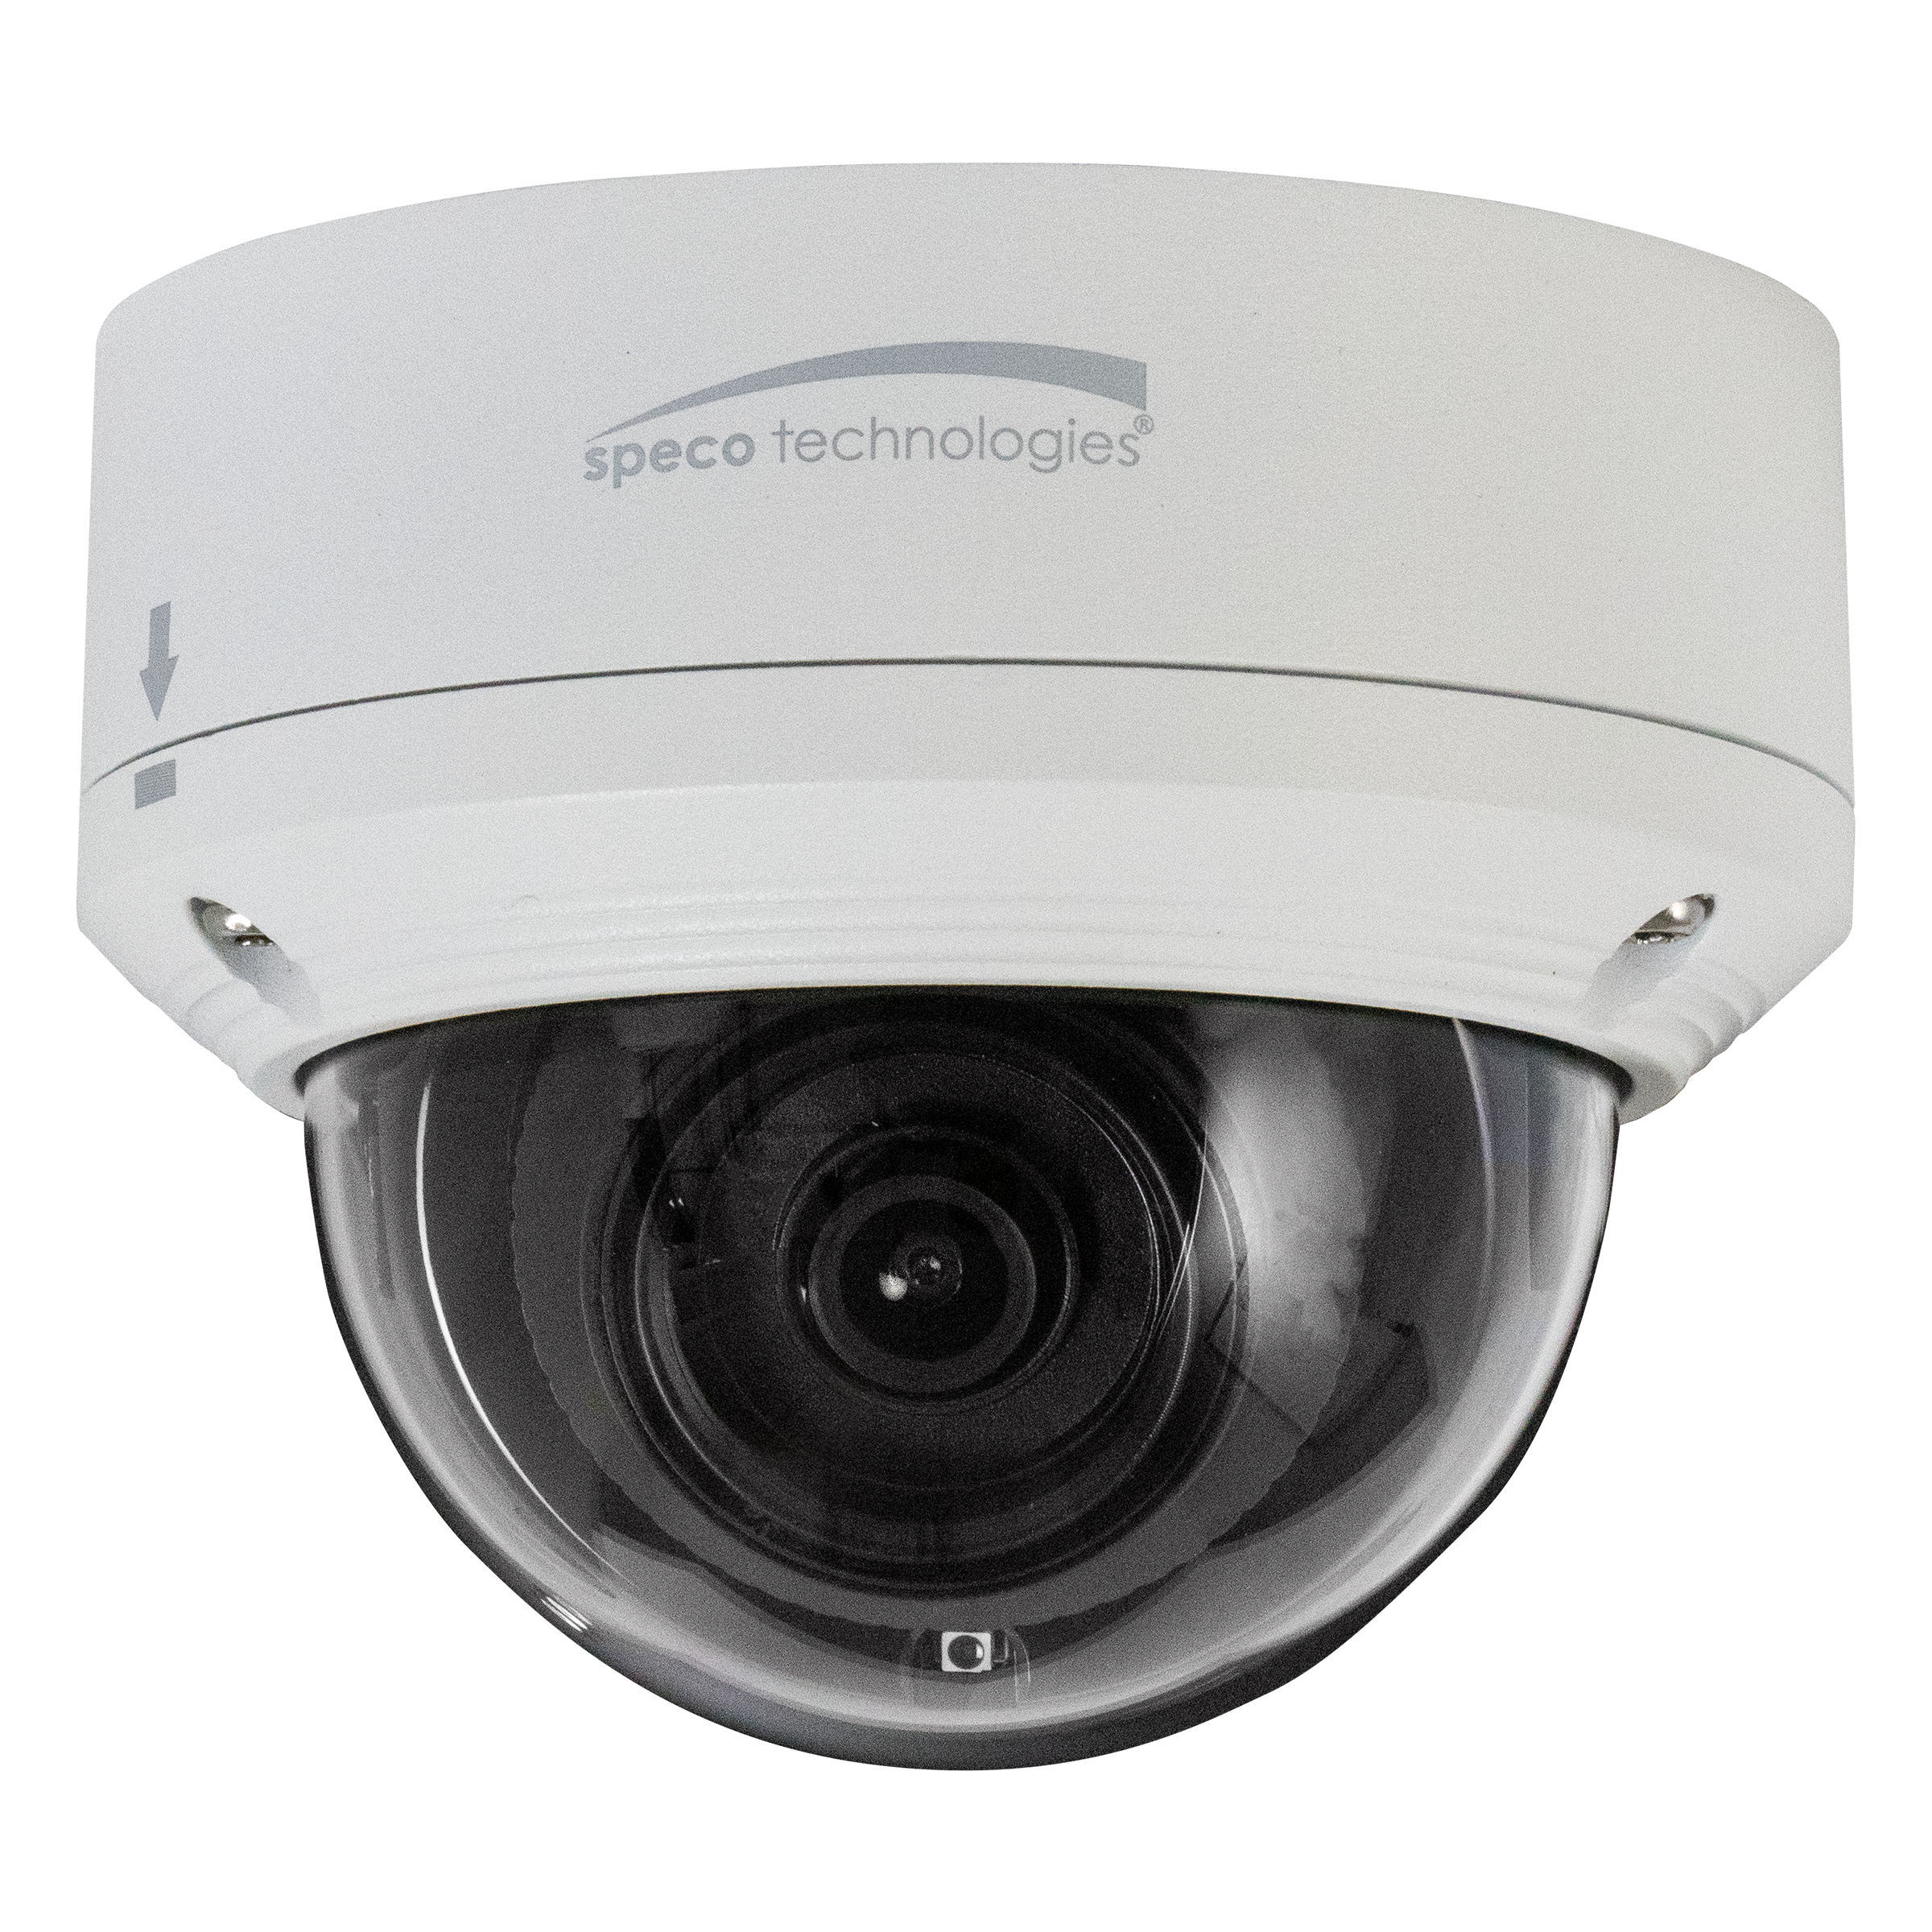 Speco | Speco IP Dome Camera
5MP 2.8MM Advanced Analytic
NDAA